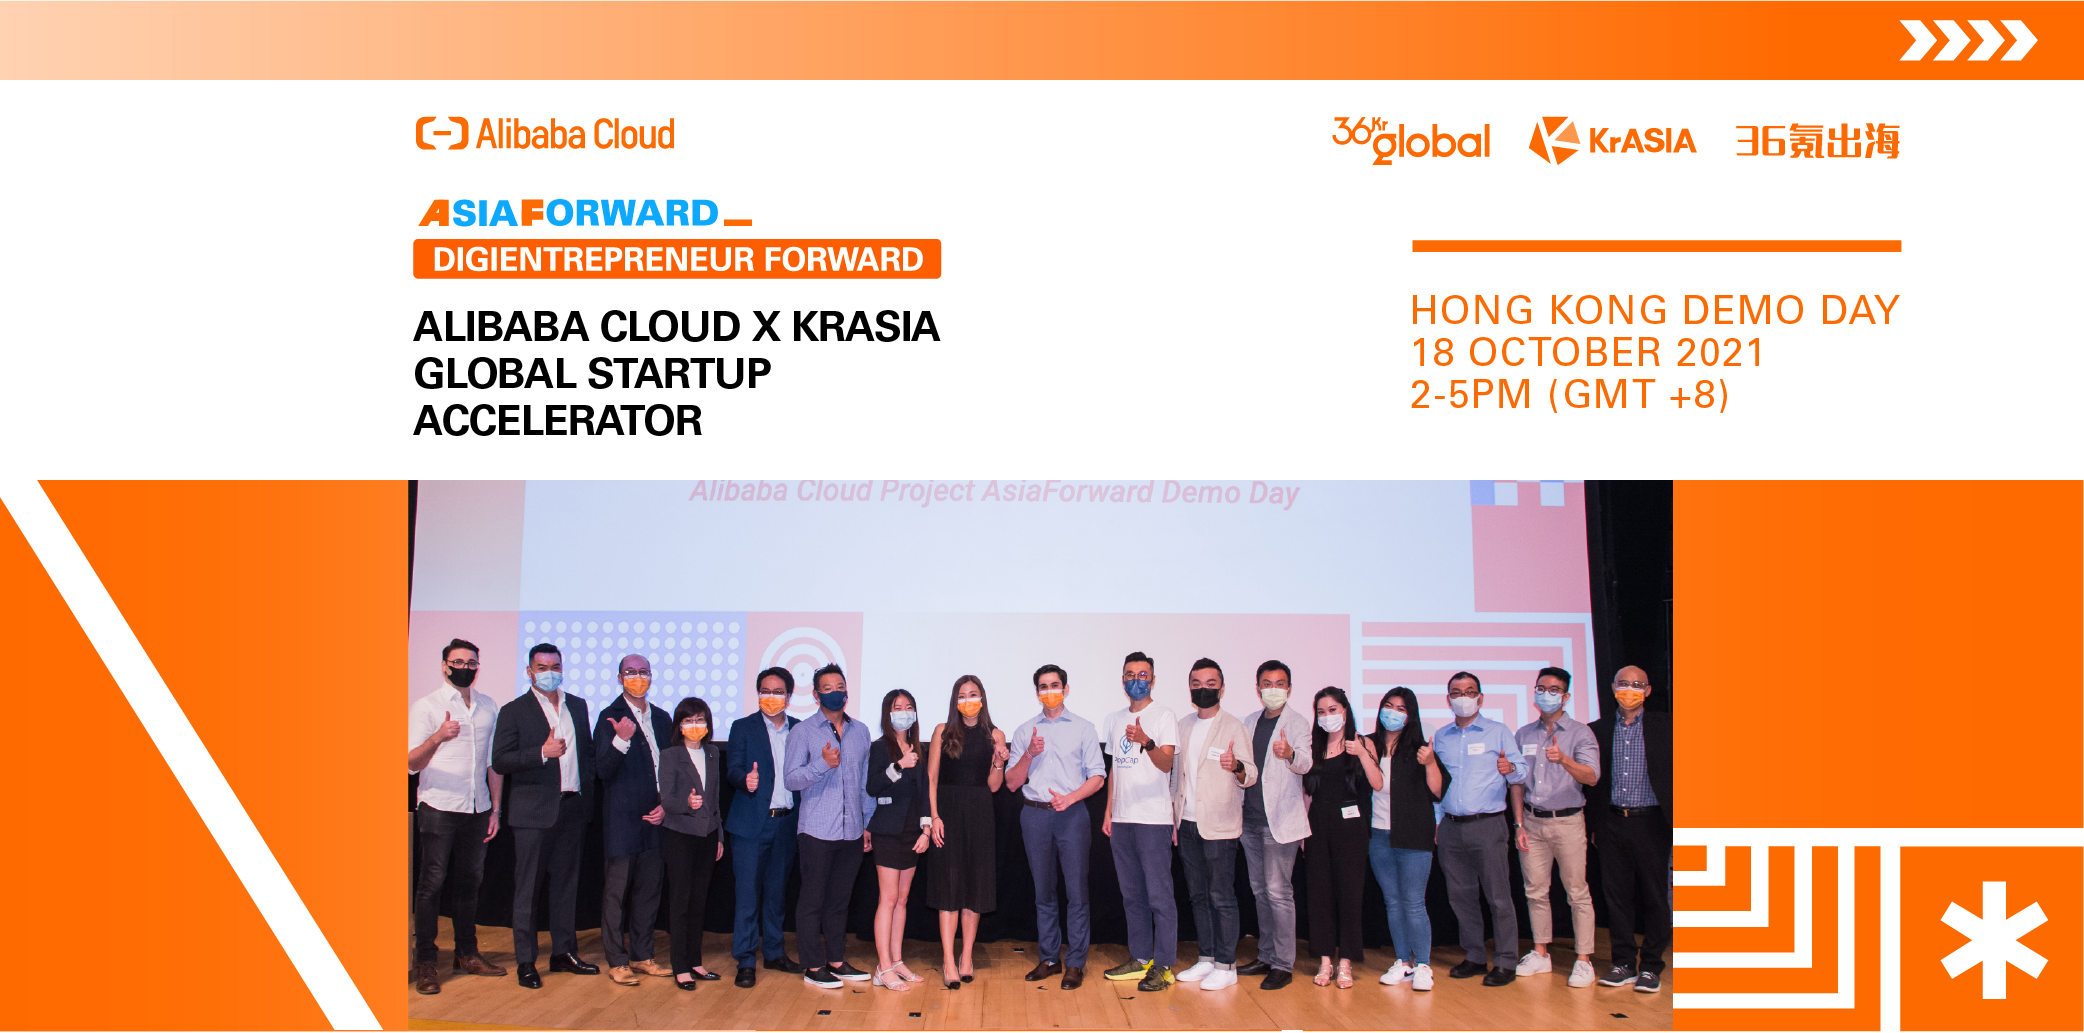 Recap of the Alibaba Cloud x KrASIA Global Startup Accelerator Hong Kong Demo Day